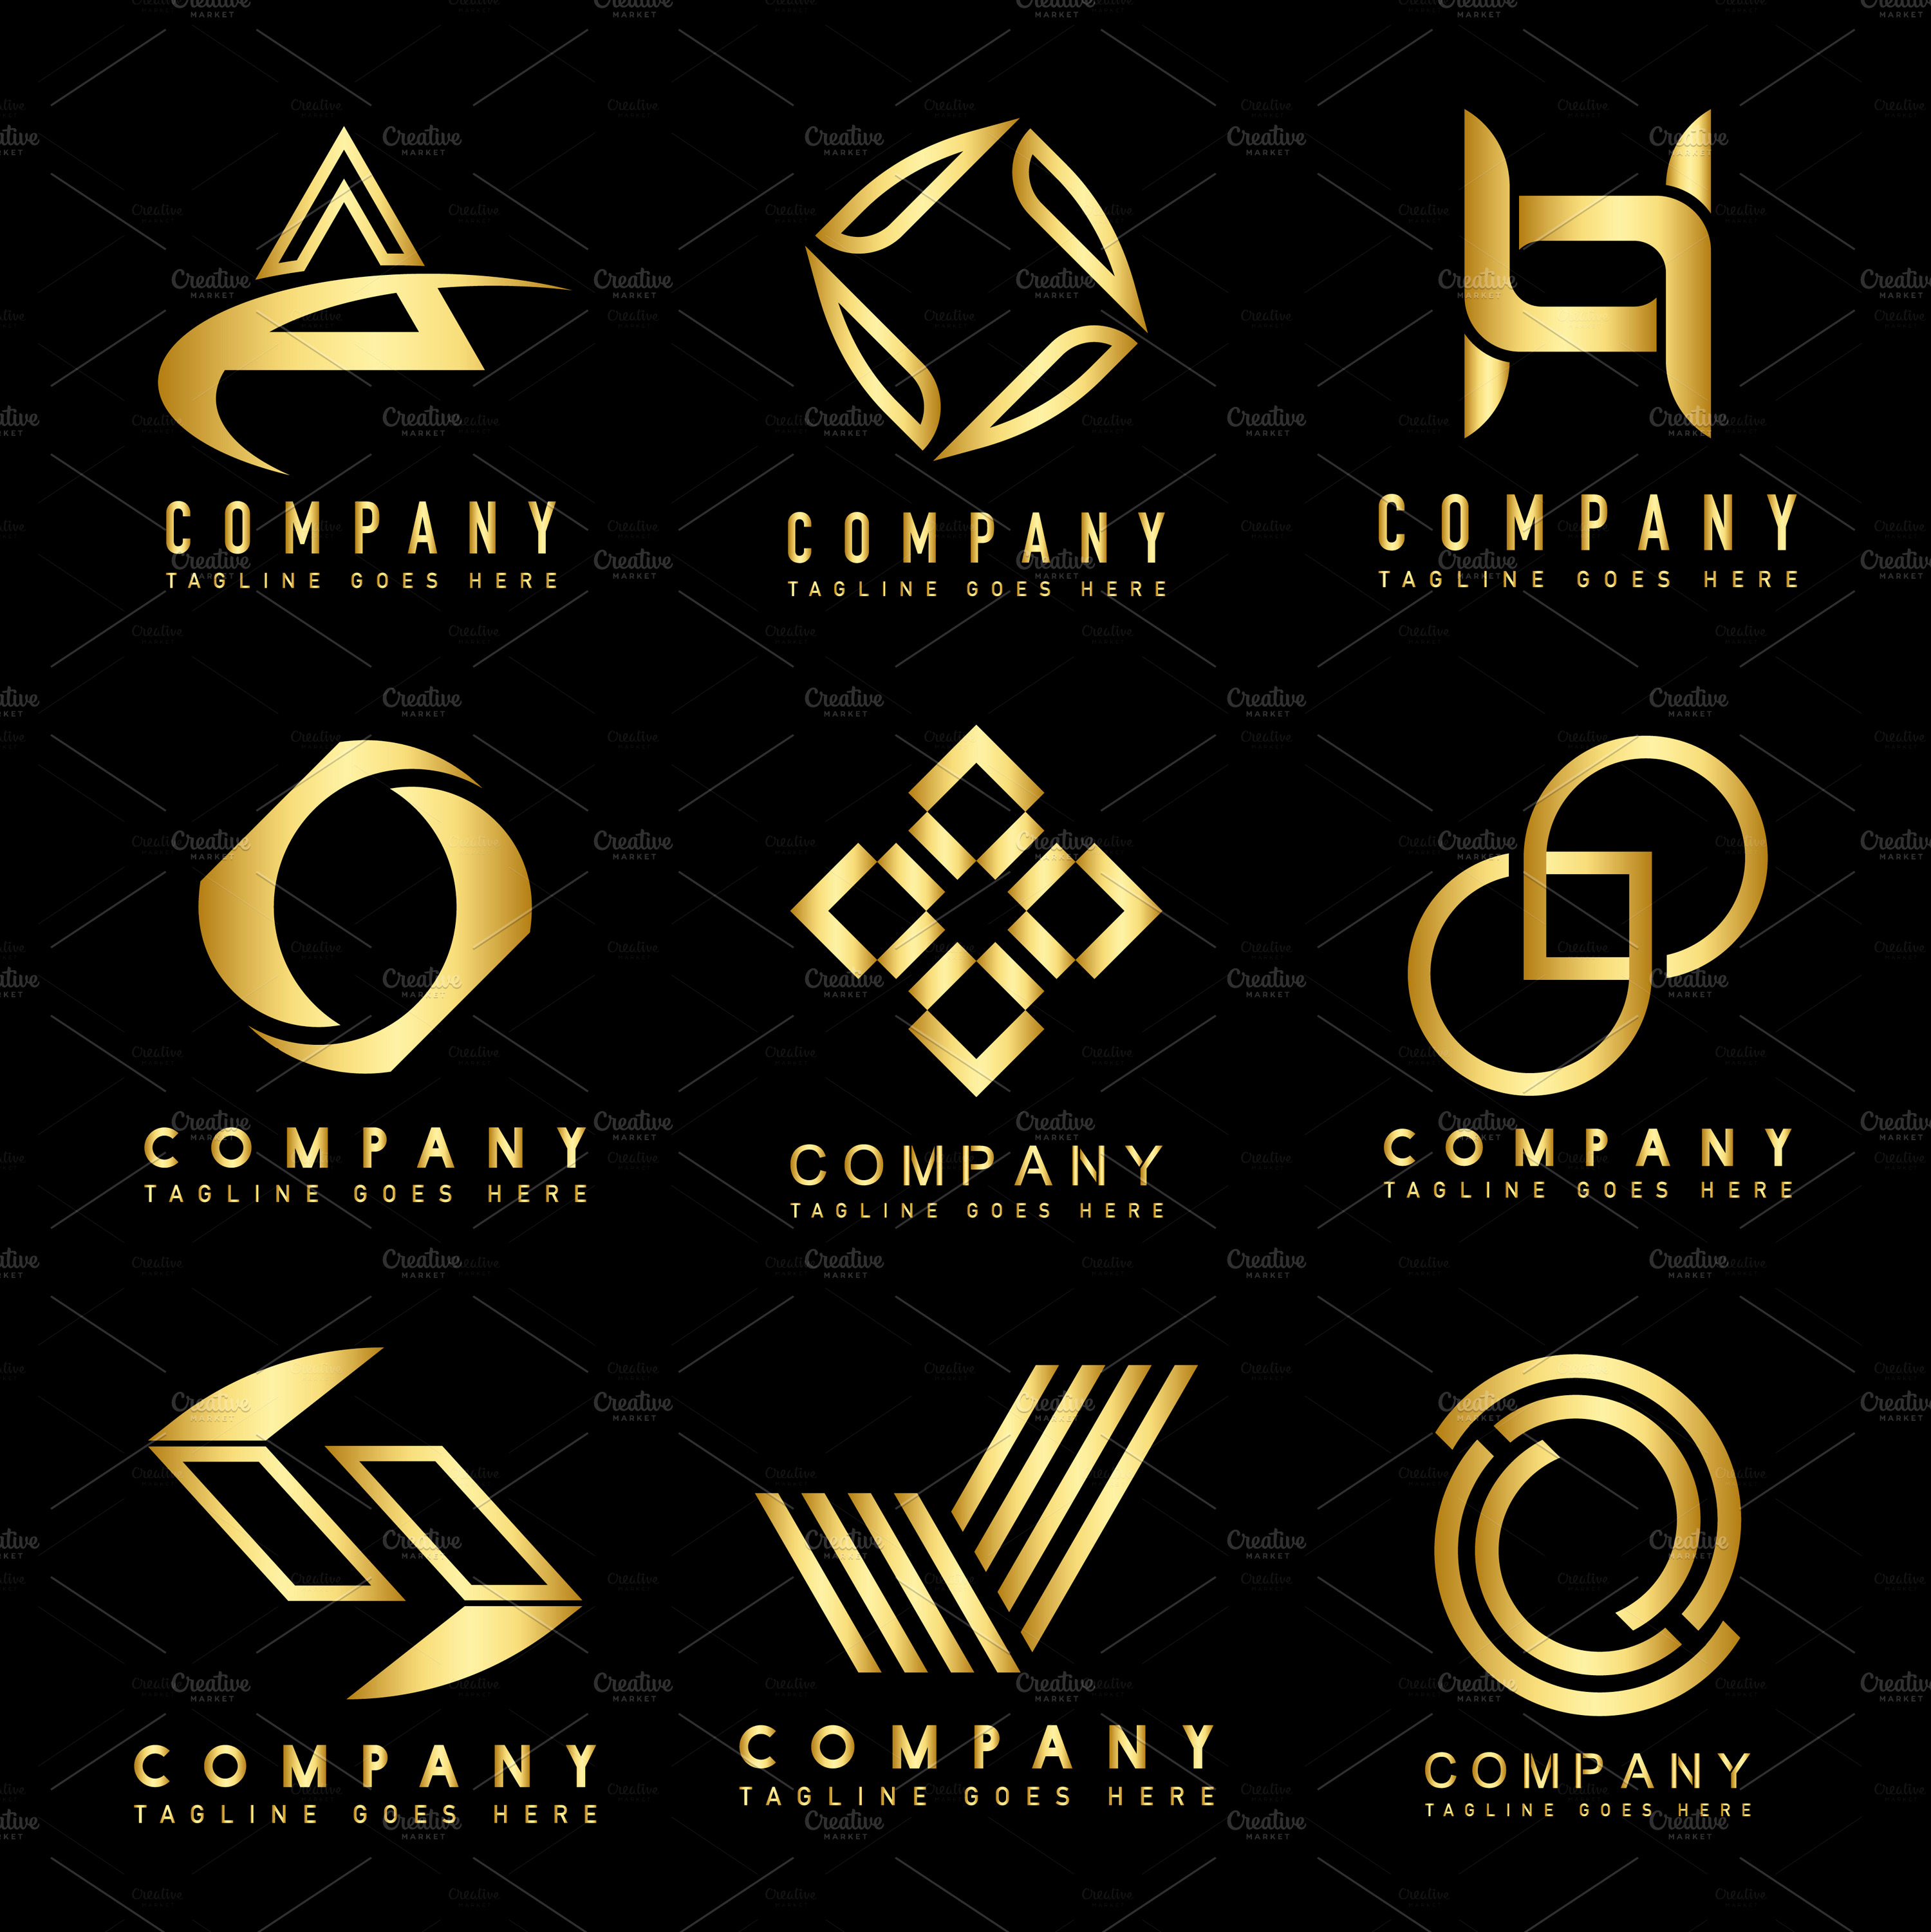 graphic representation of a company name